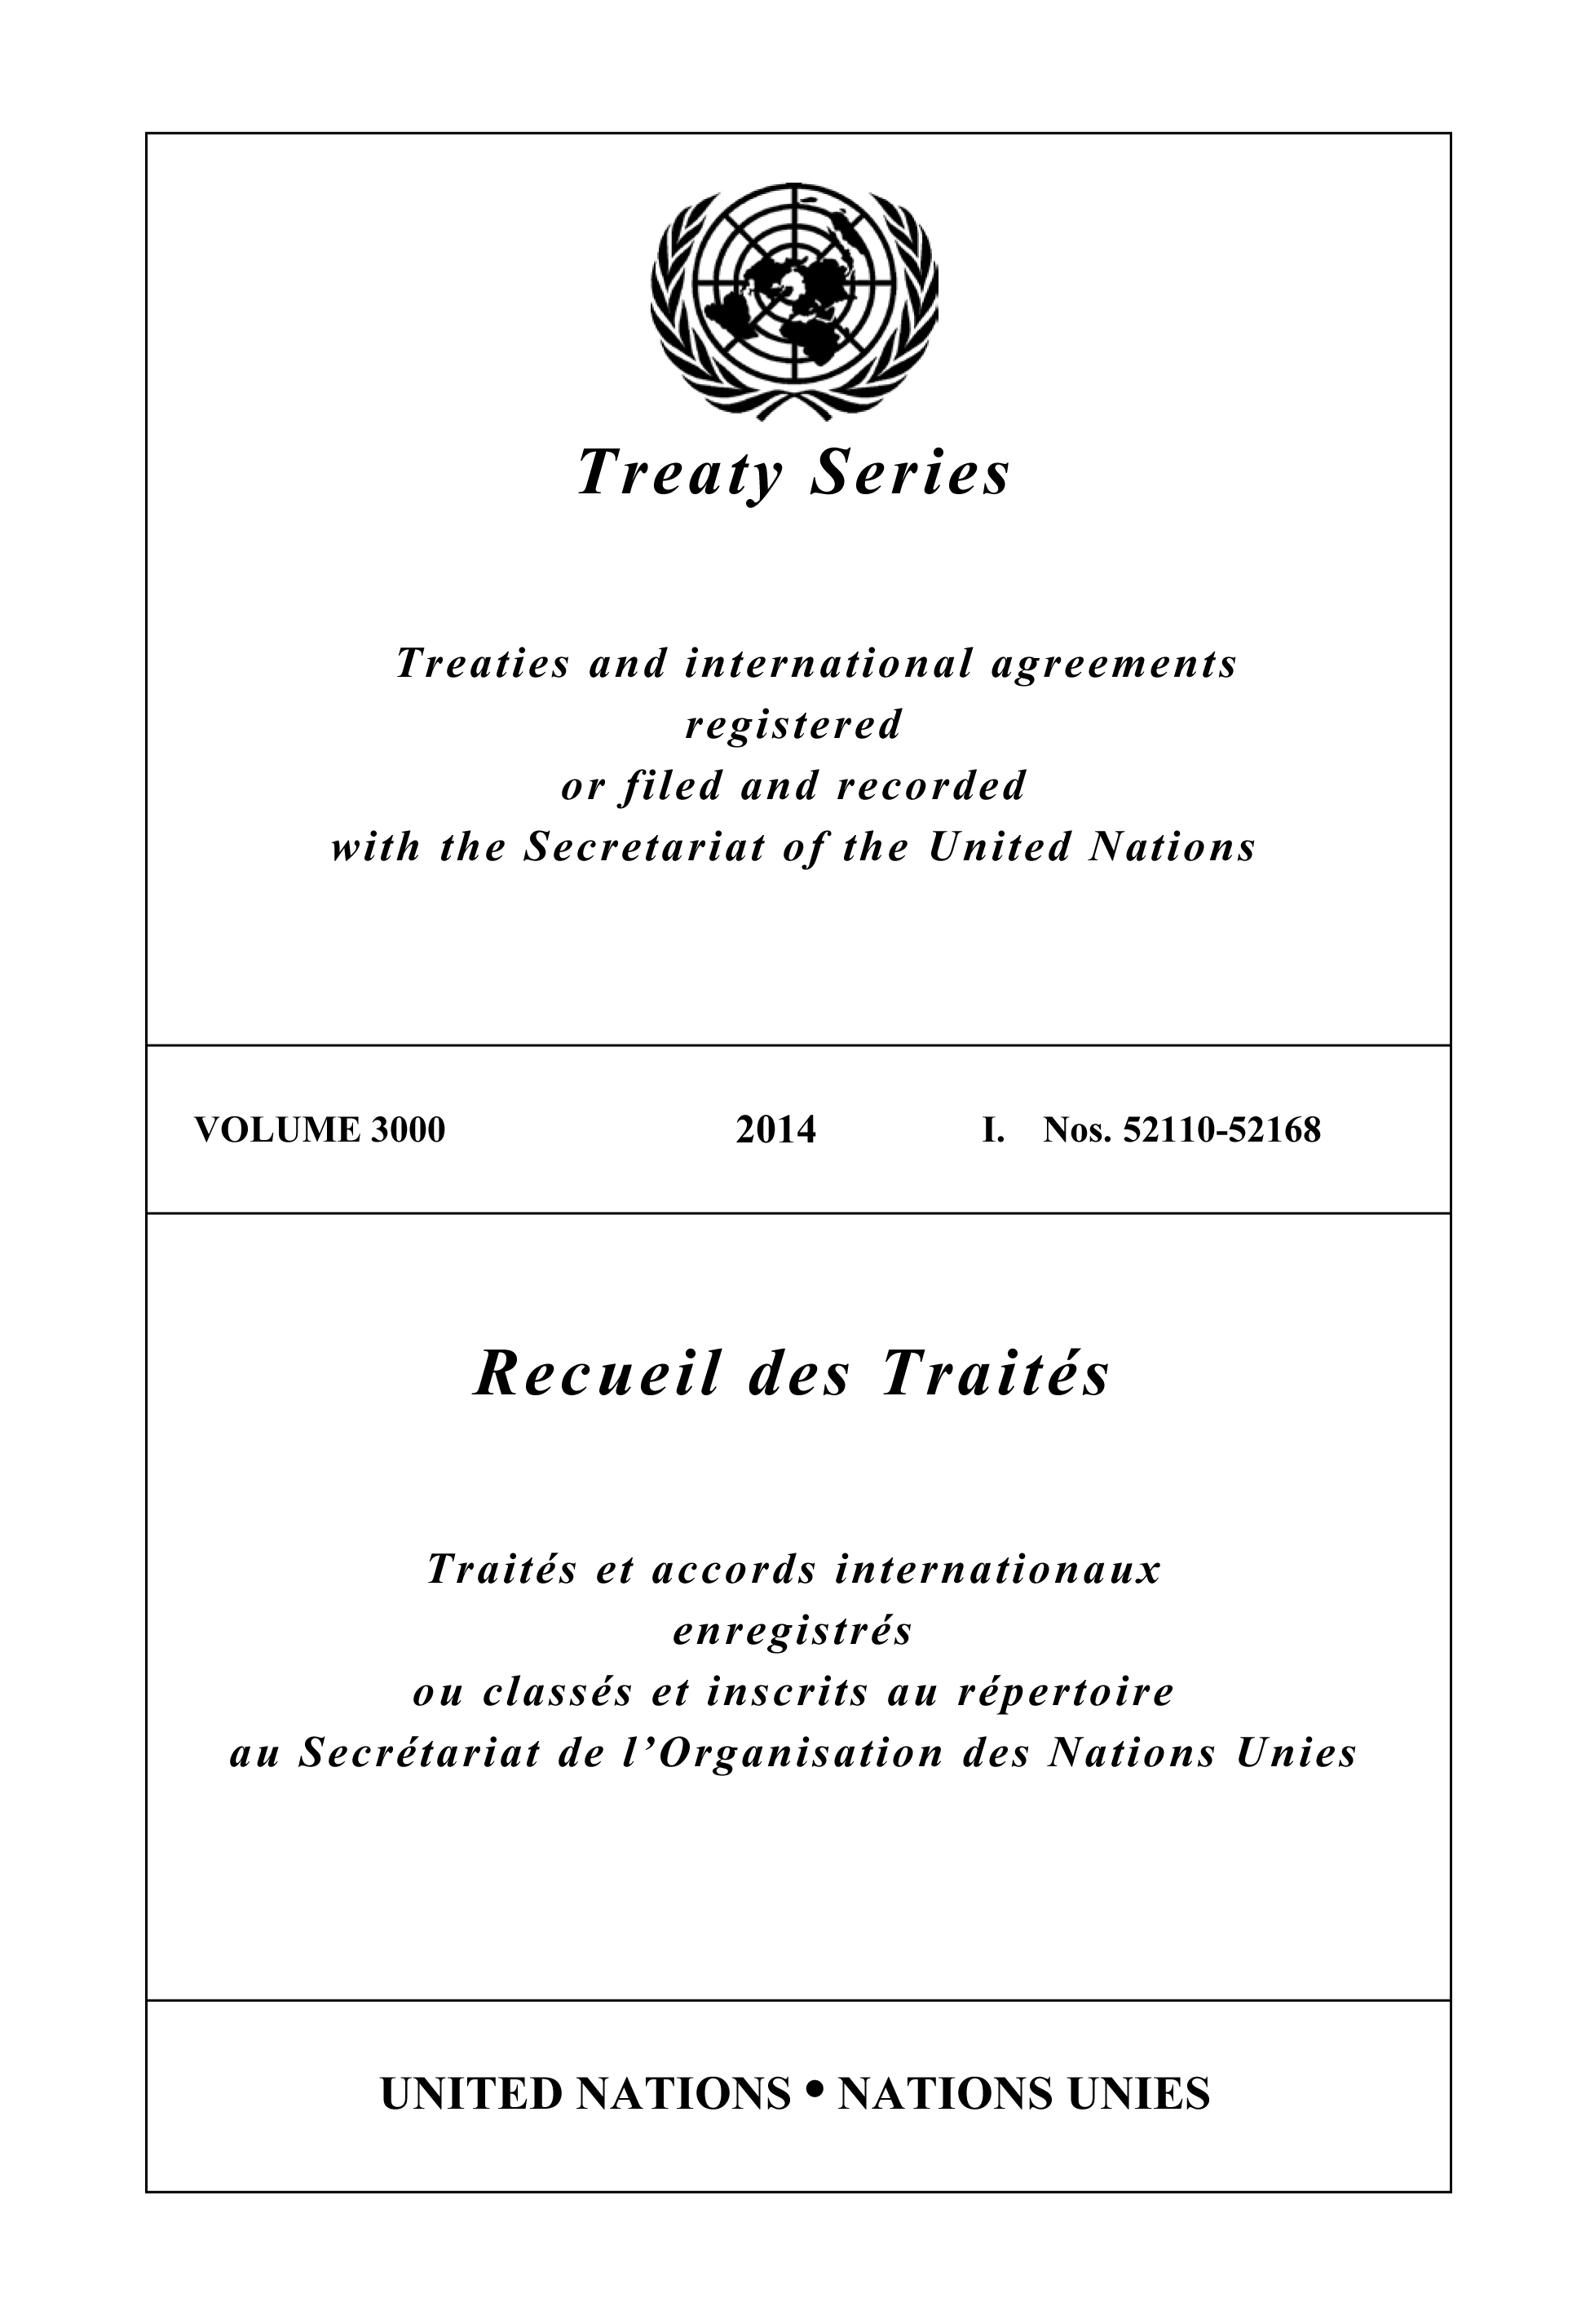 image of Treaty Series 3000